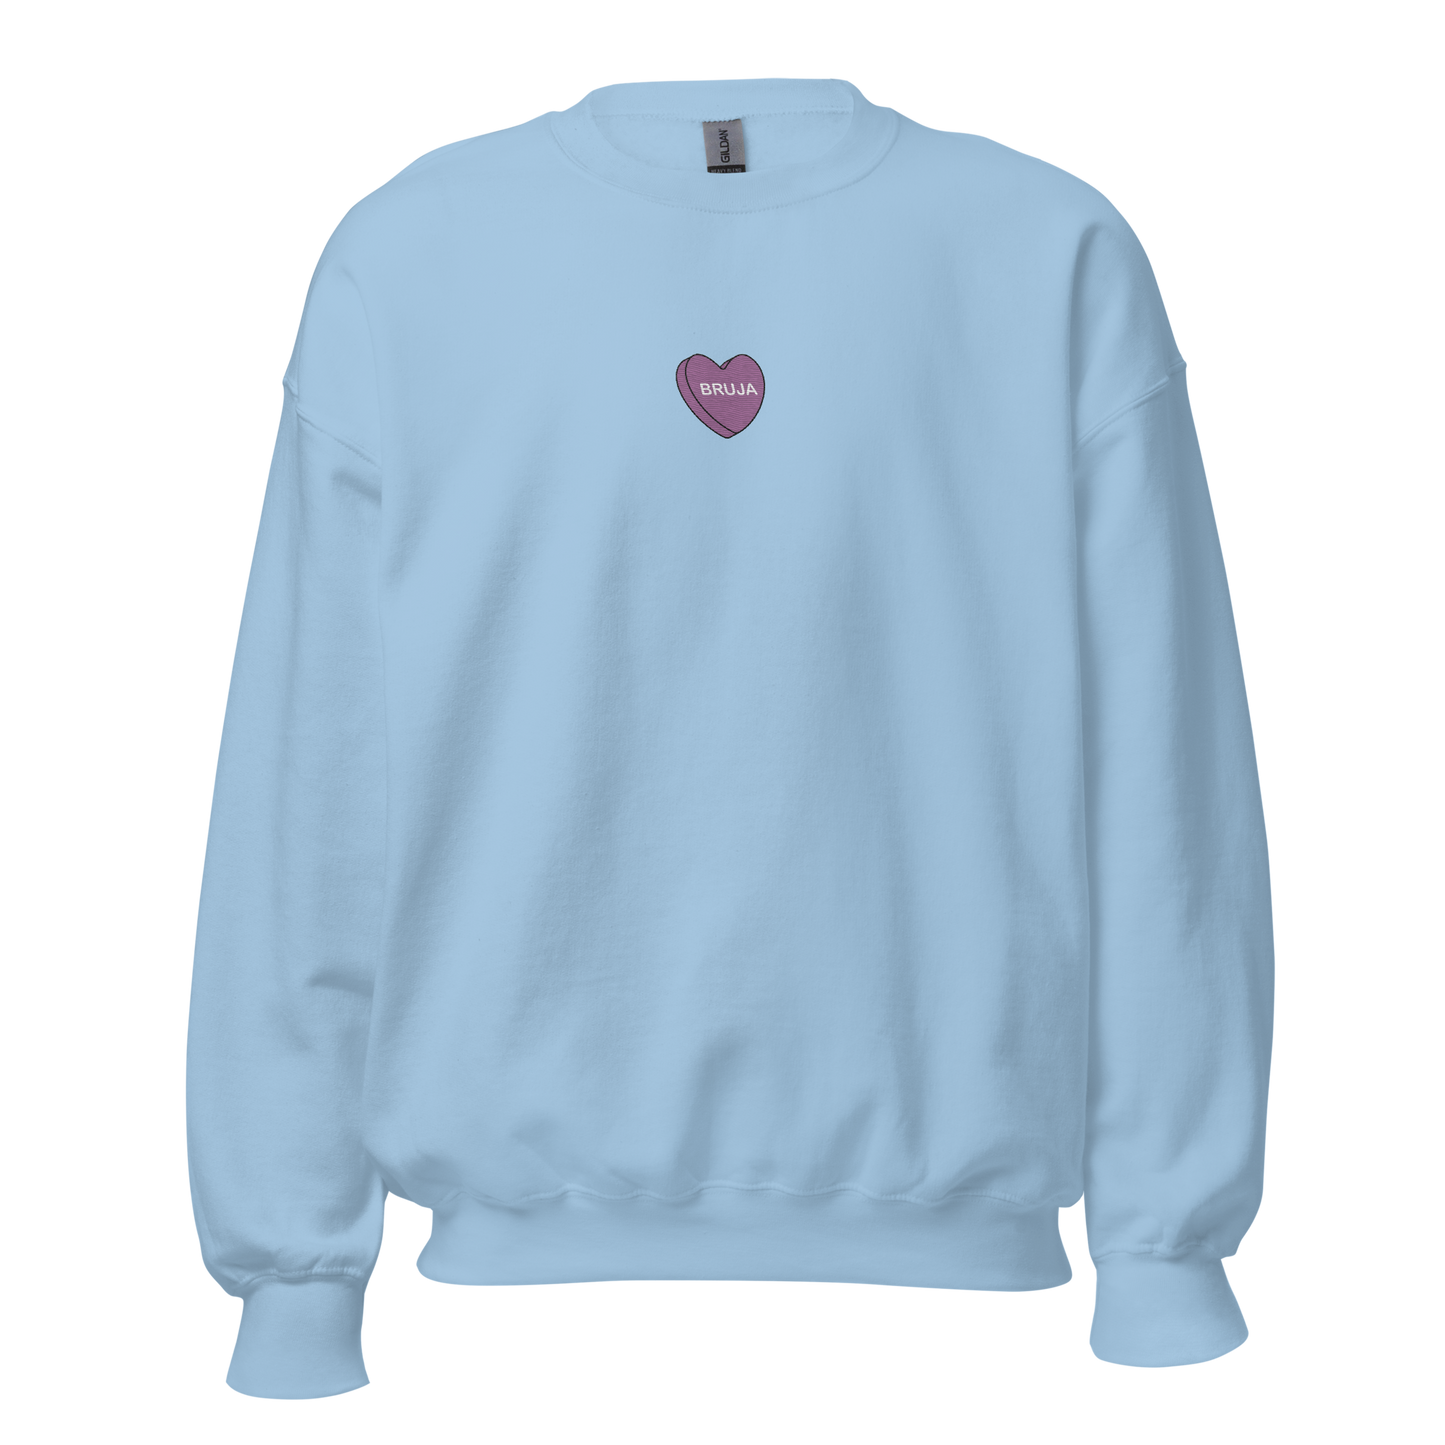 Bruja Candy Conversation Heart - Embroidered Unisex Sweatshirt